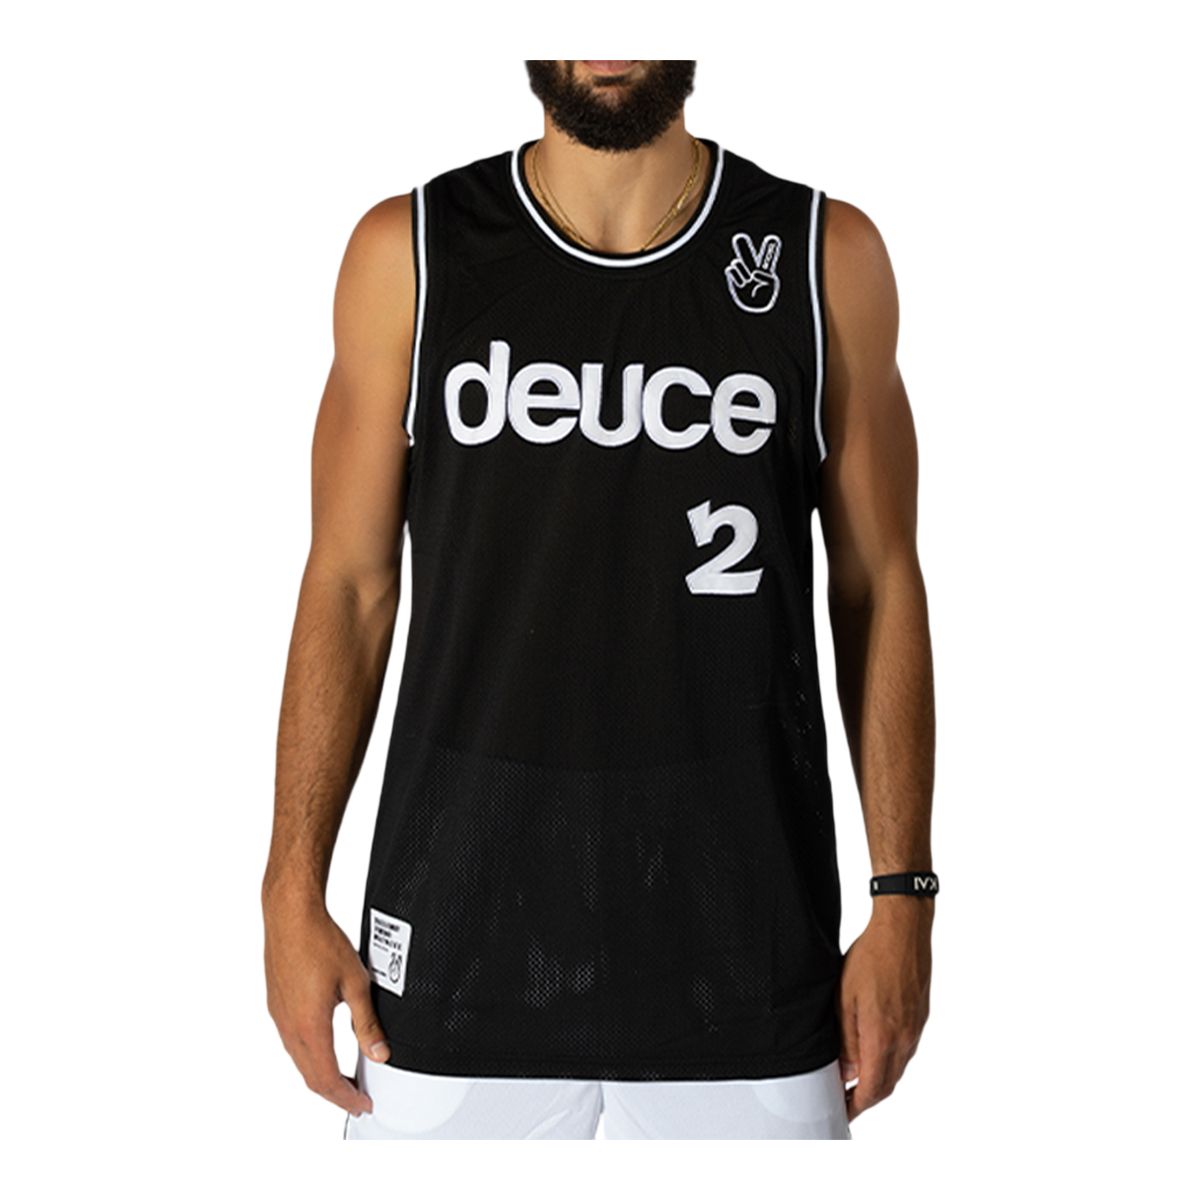 Deuce Men's Basketball Sleeveless Jersey